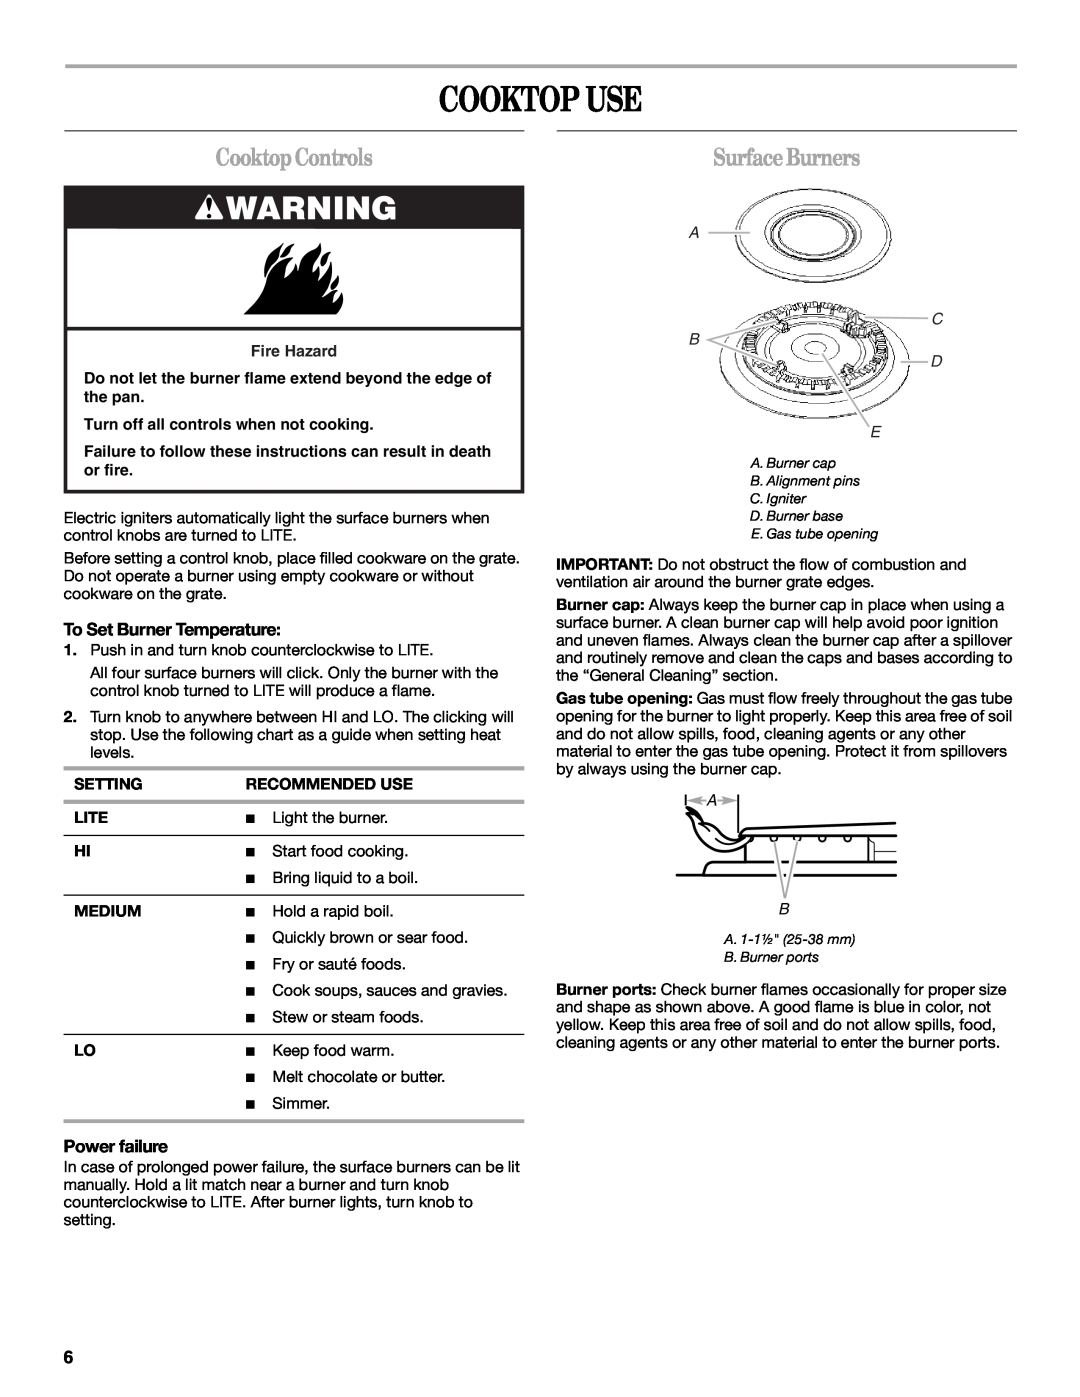 Whirlpool W10099470 Cooktop Use, CooktopControls, SurfaceBurners, To Set Burner Temperature, Power failure, Fire Hazard 